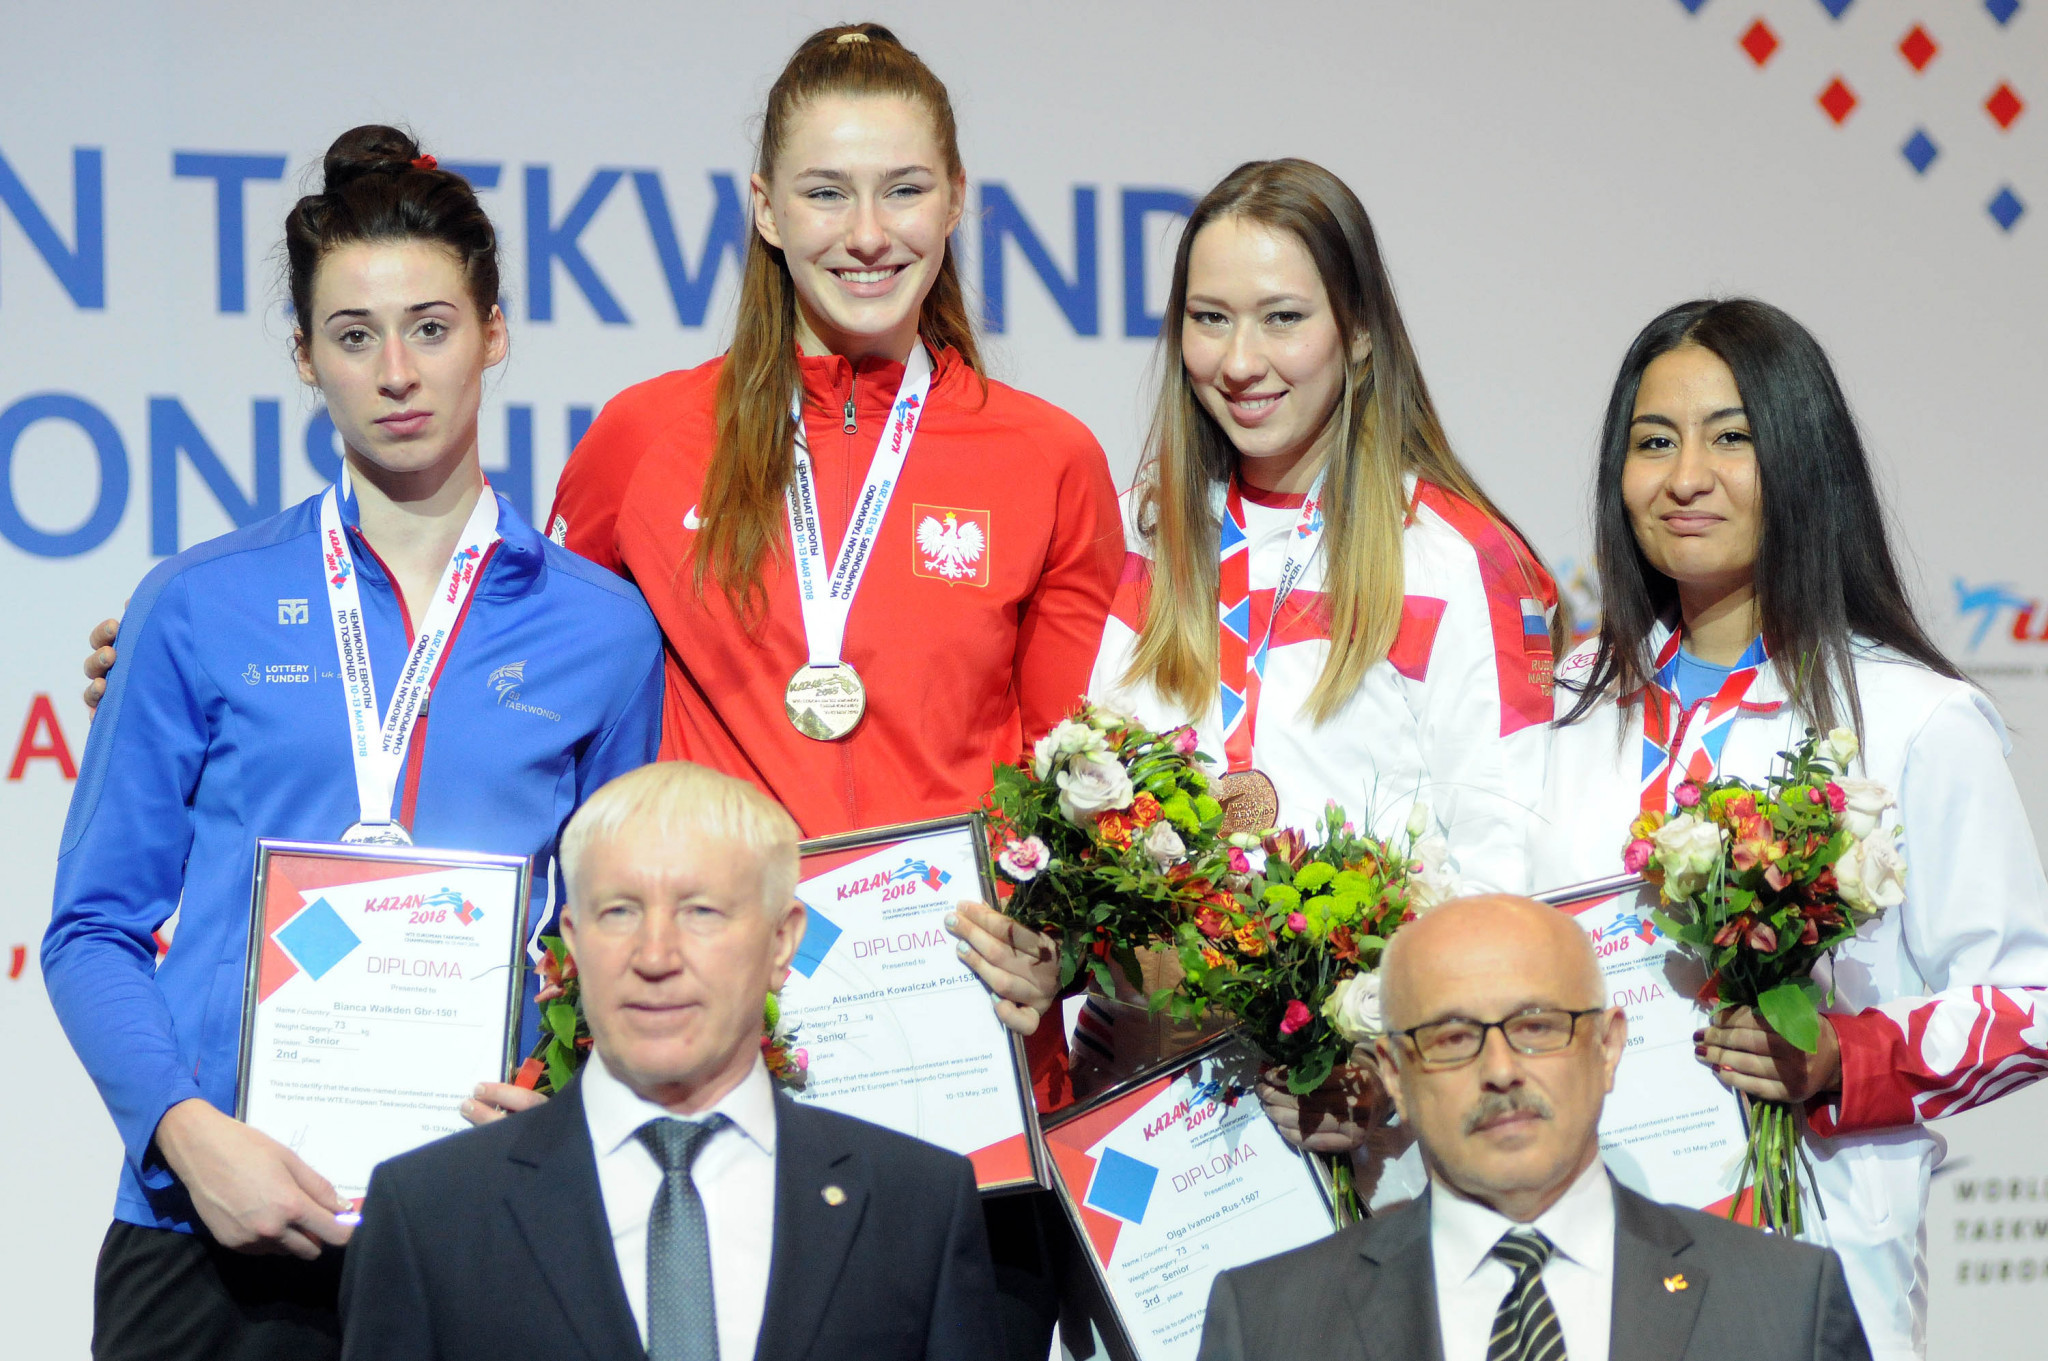 Kowalczuk upsets Walkden to claim gold at European Taekwondo Championships